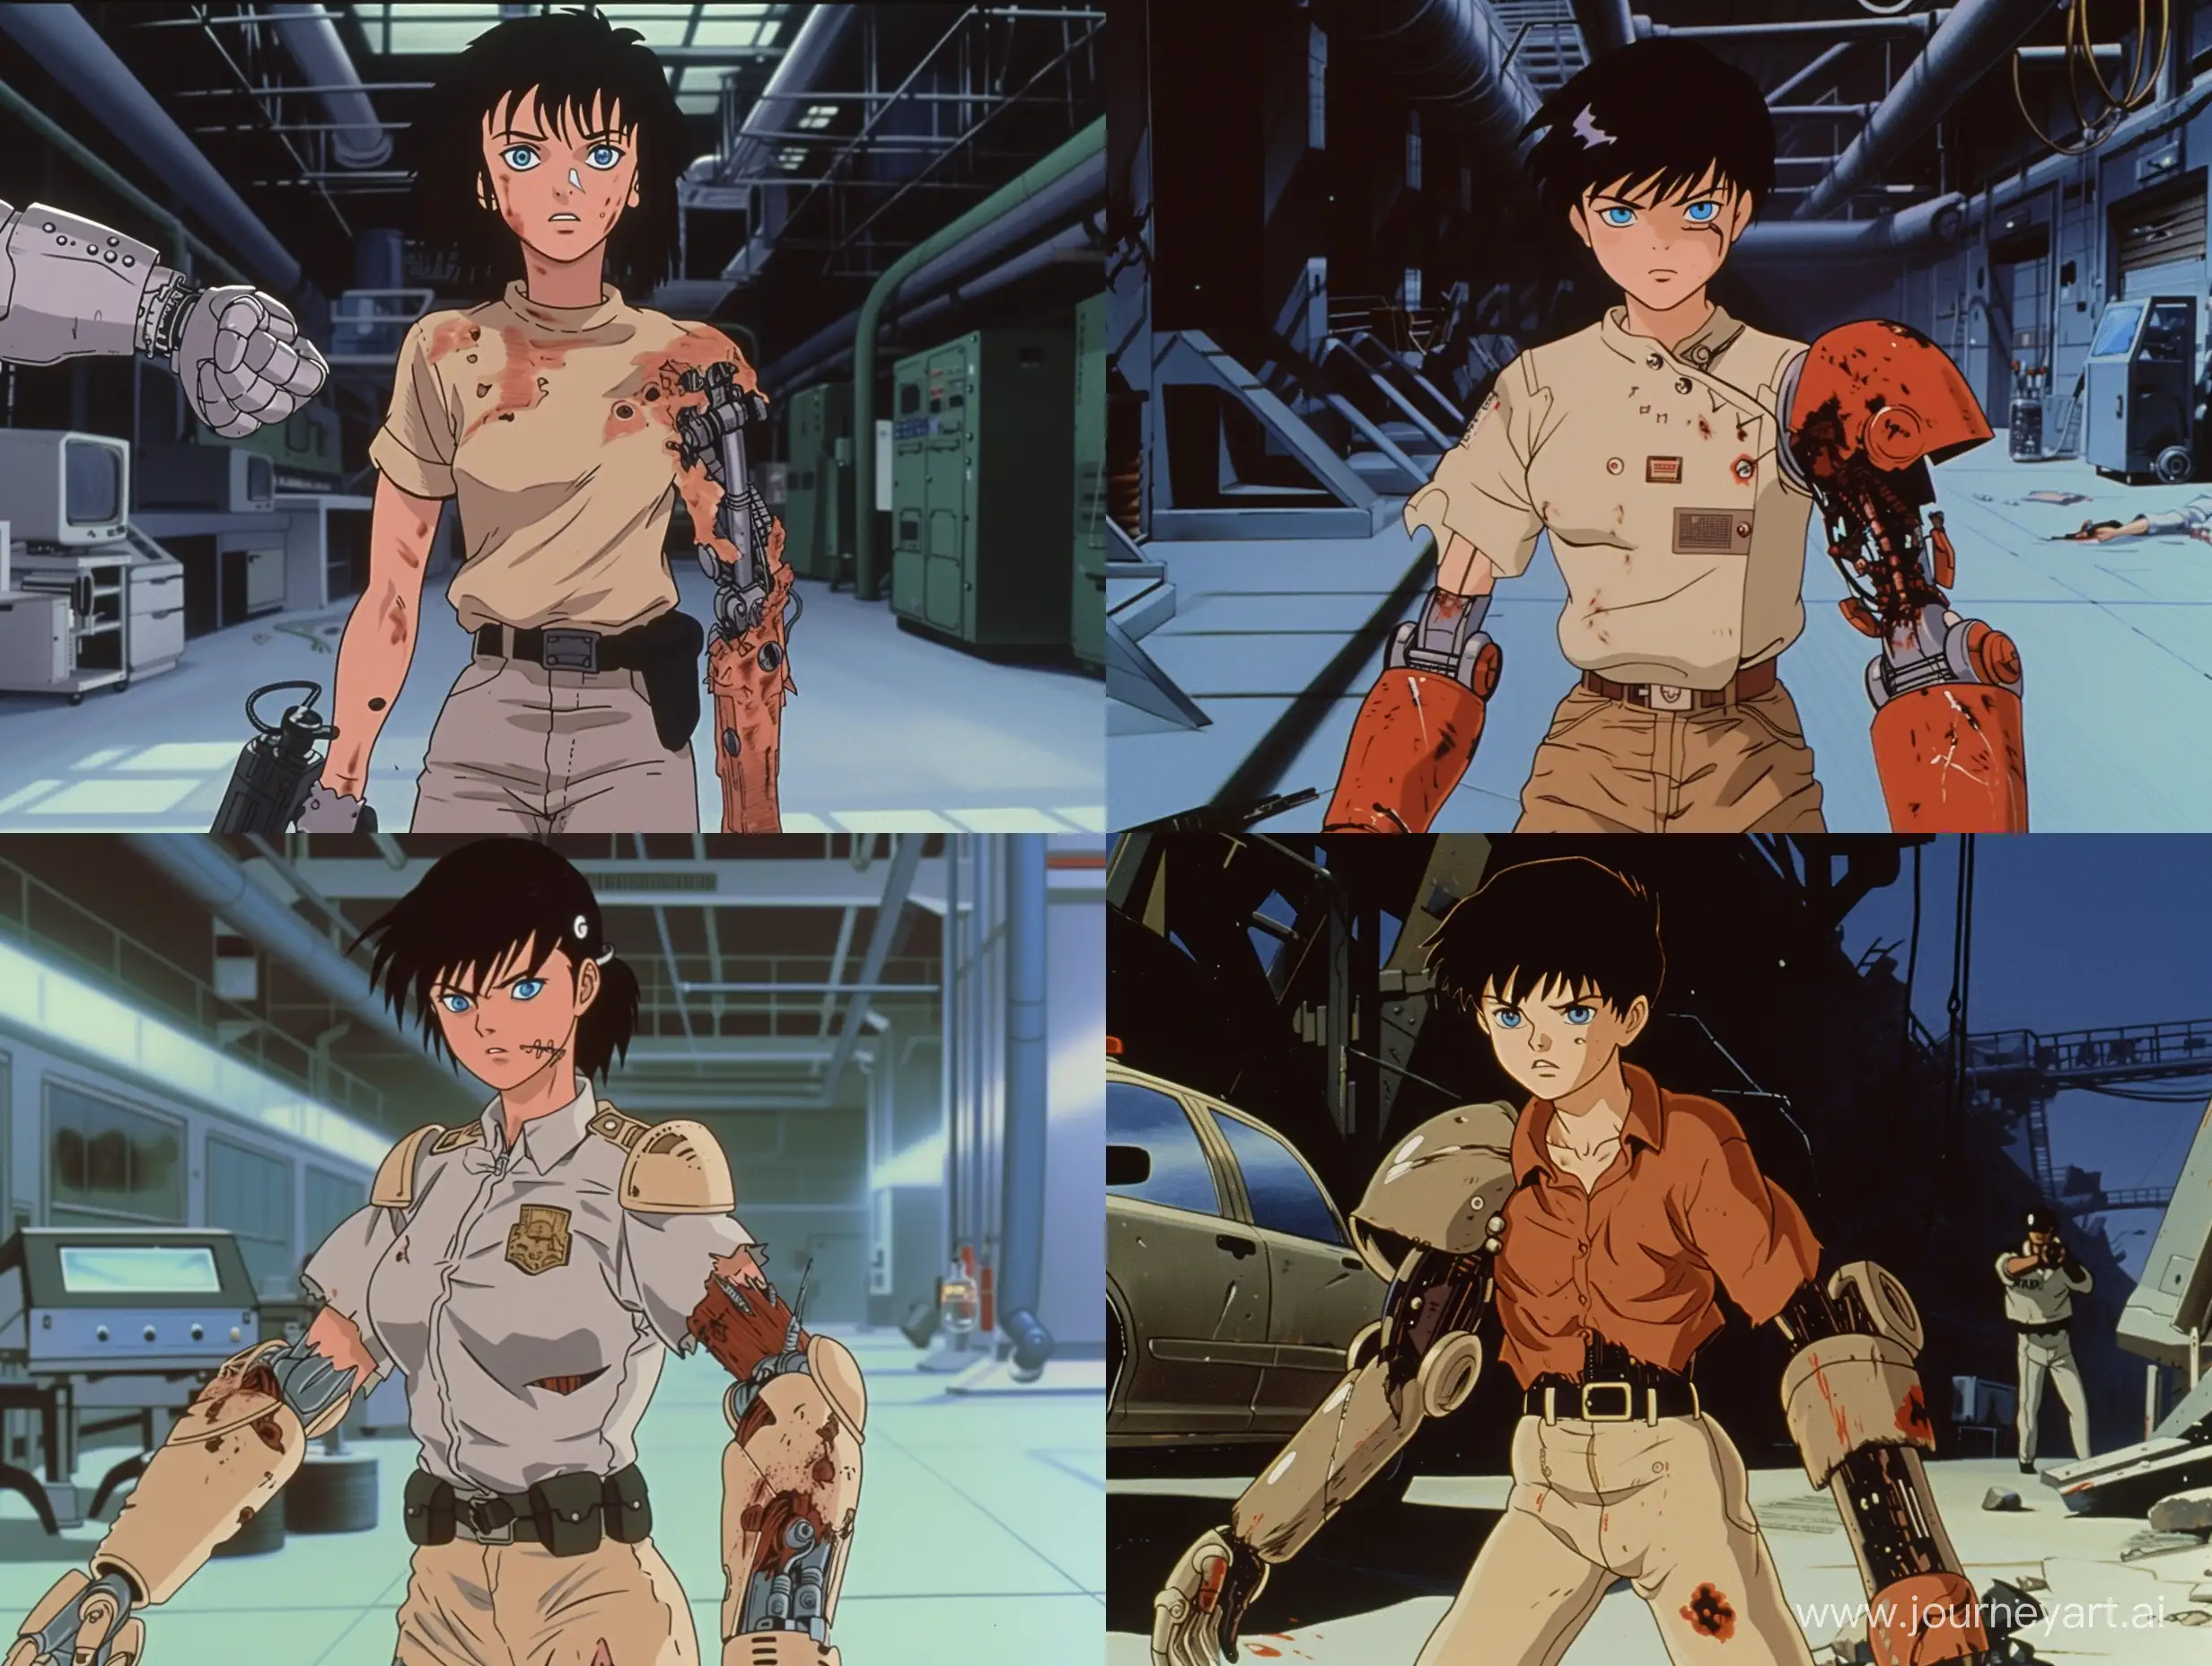 Nostalgic-90s-Anime-Showdown-Cyborg-vs-Cop-in-AkiraInspired-Scene